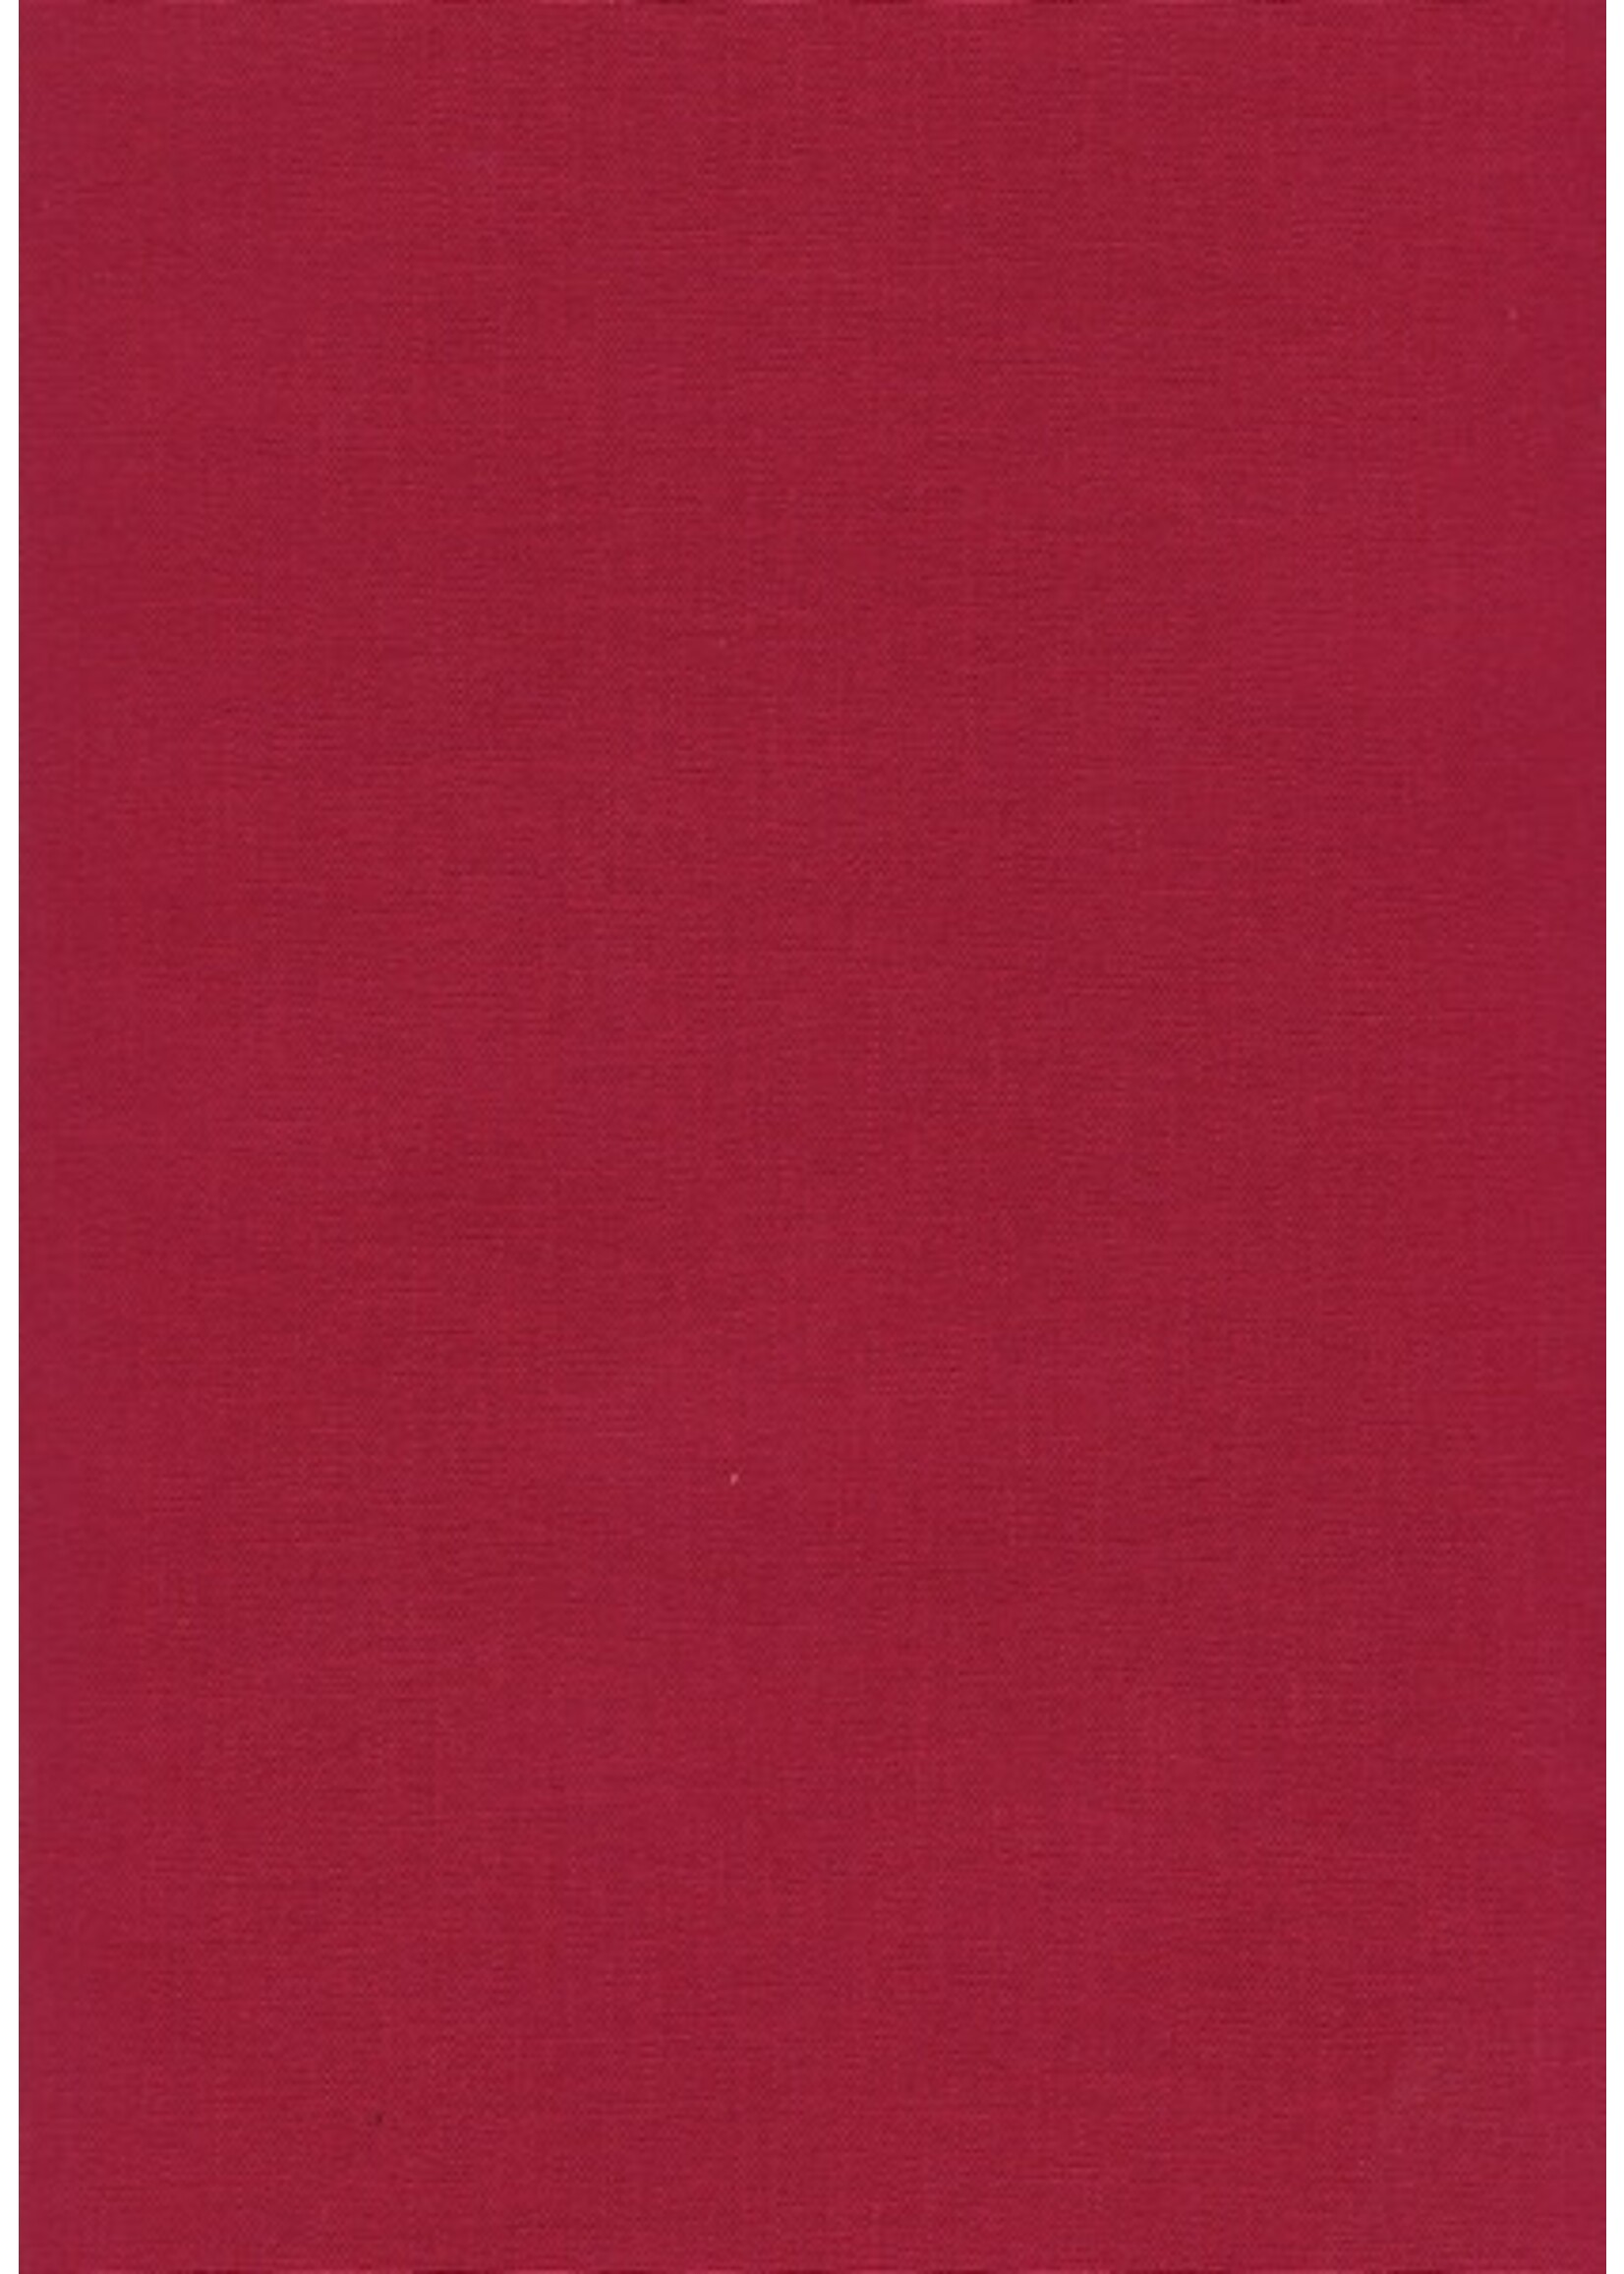 boekbindlinnen Licht Bordeau Rood circa 55 x65 cm